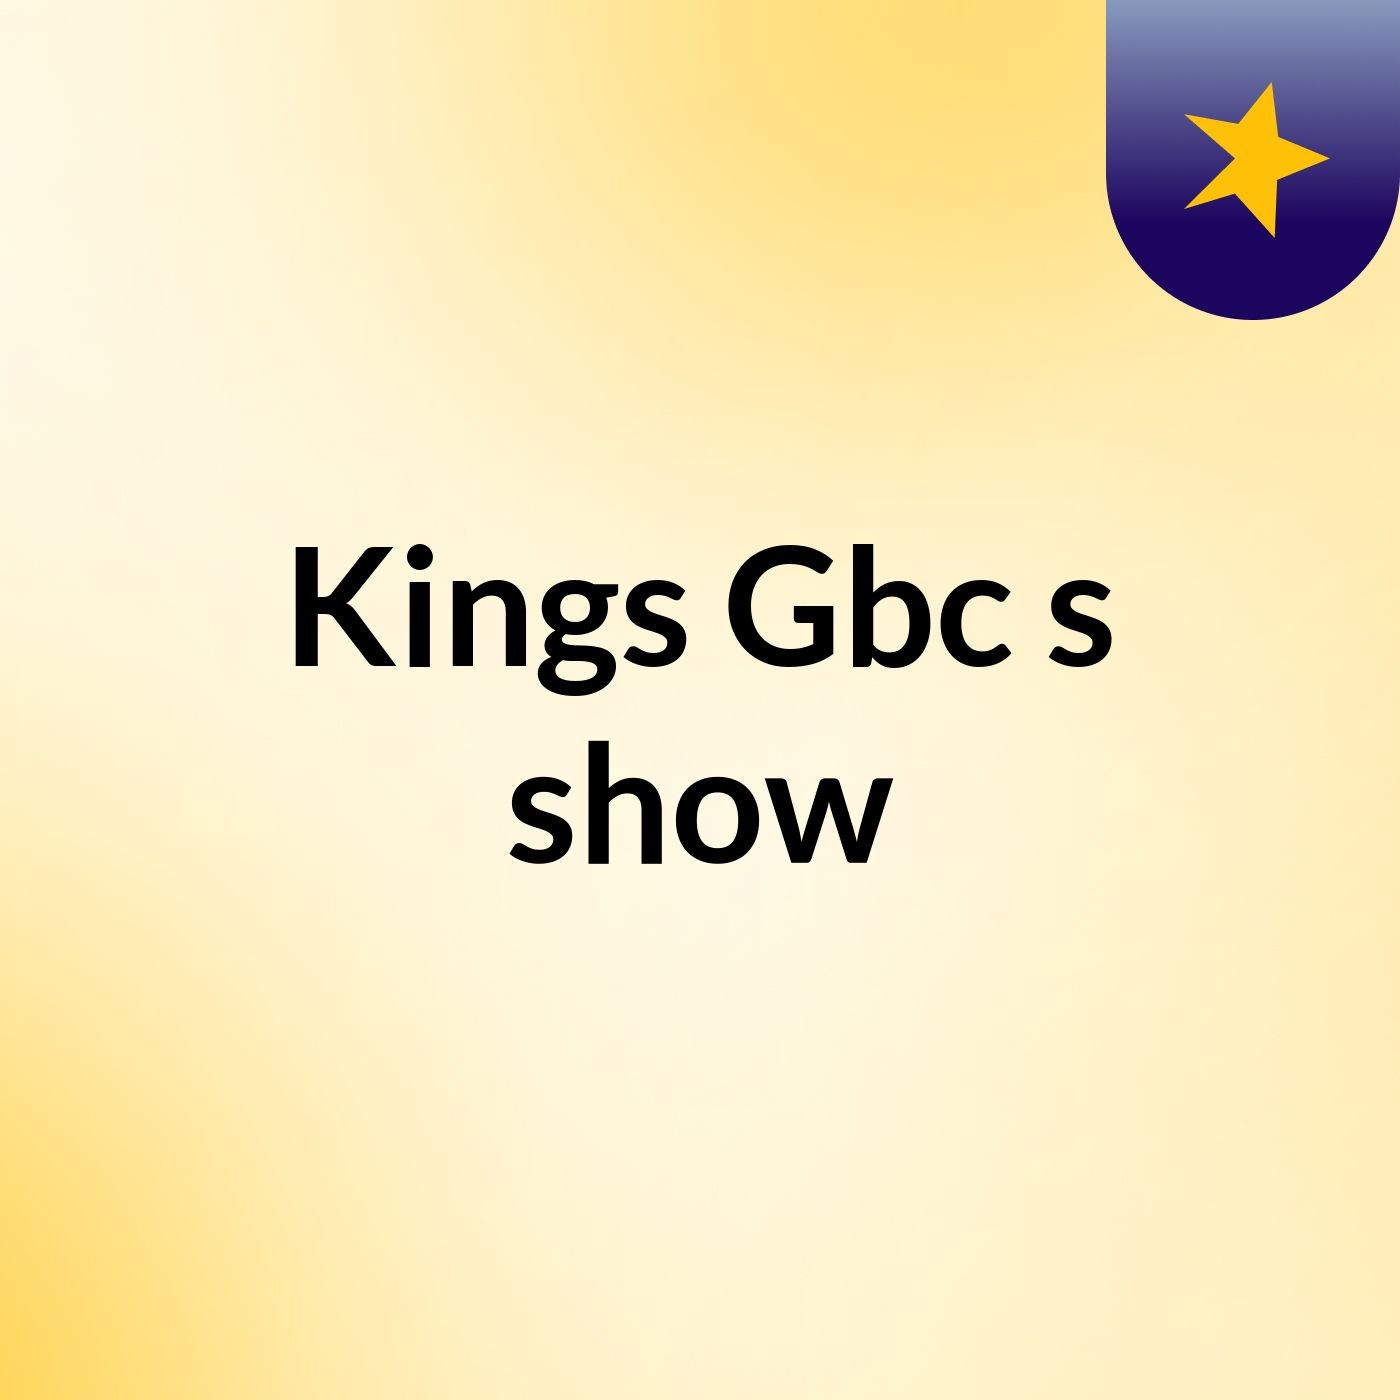 Kings Gbc's show